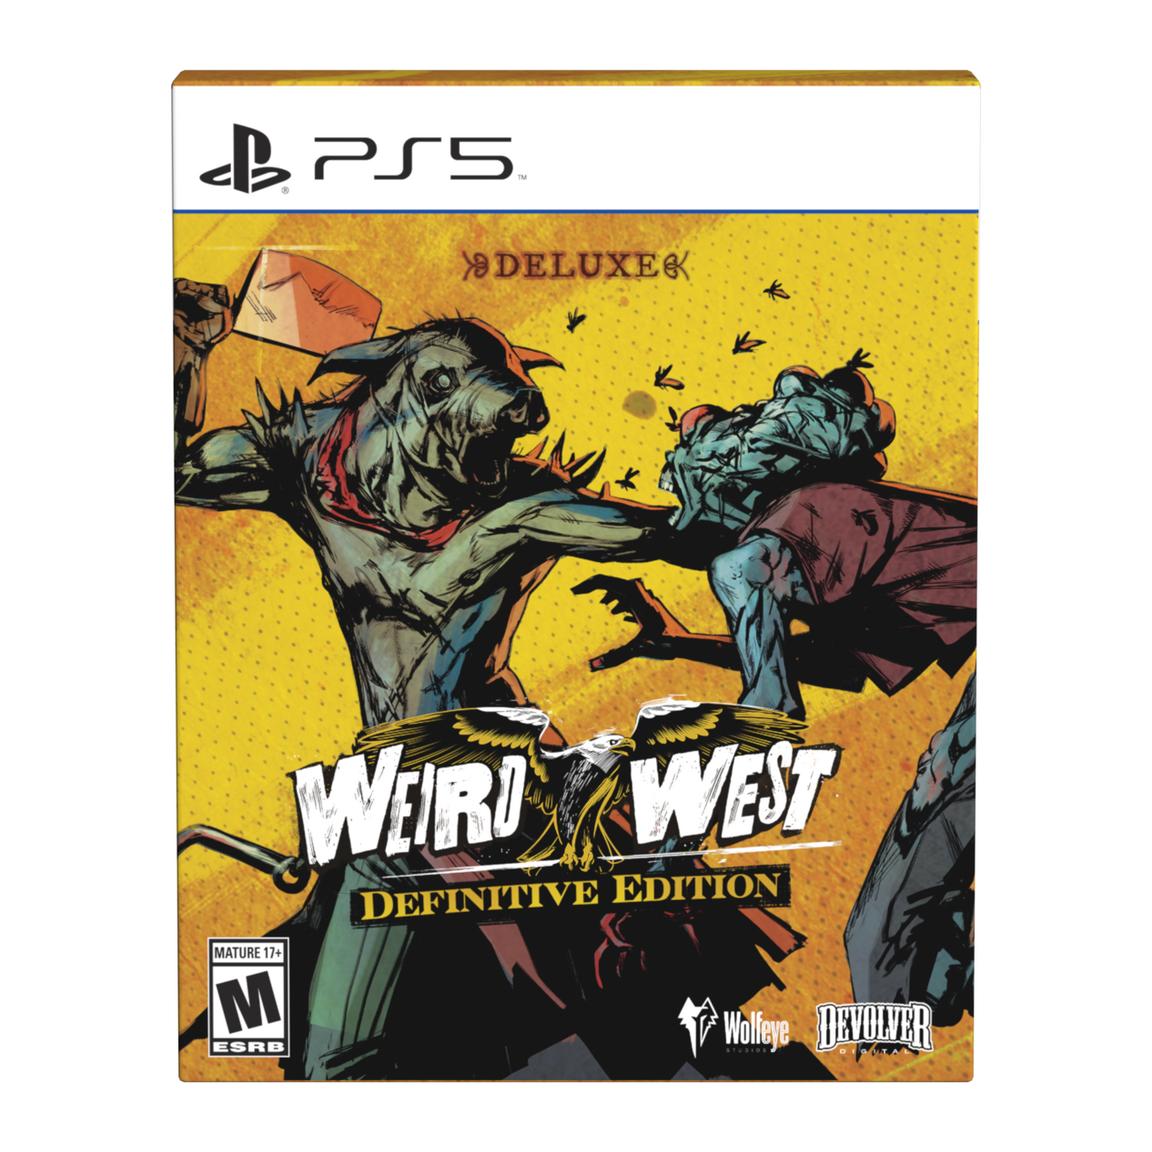 Видеоигра Weird West: Definitive Edition Deluxe - PlayStation 5 rayman legends definitive edition [switch цифровая версия] цифровая версия